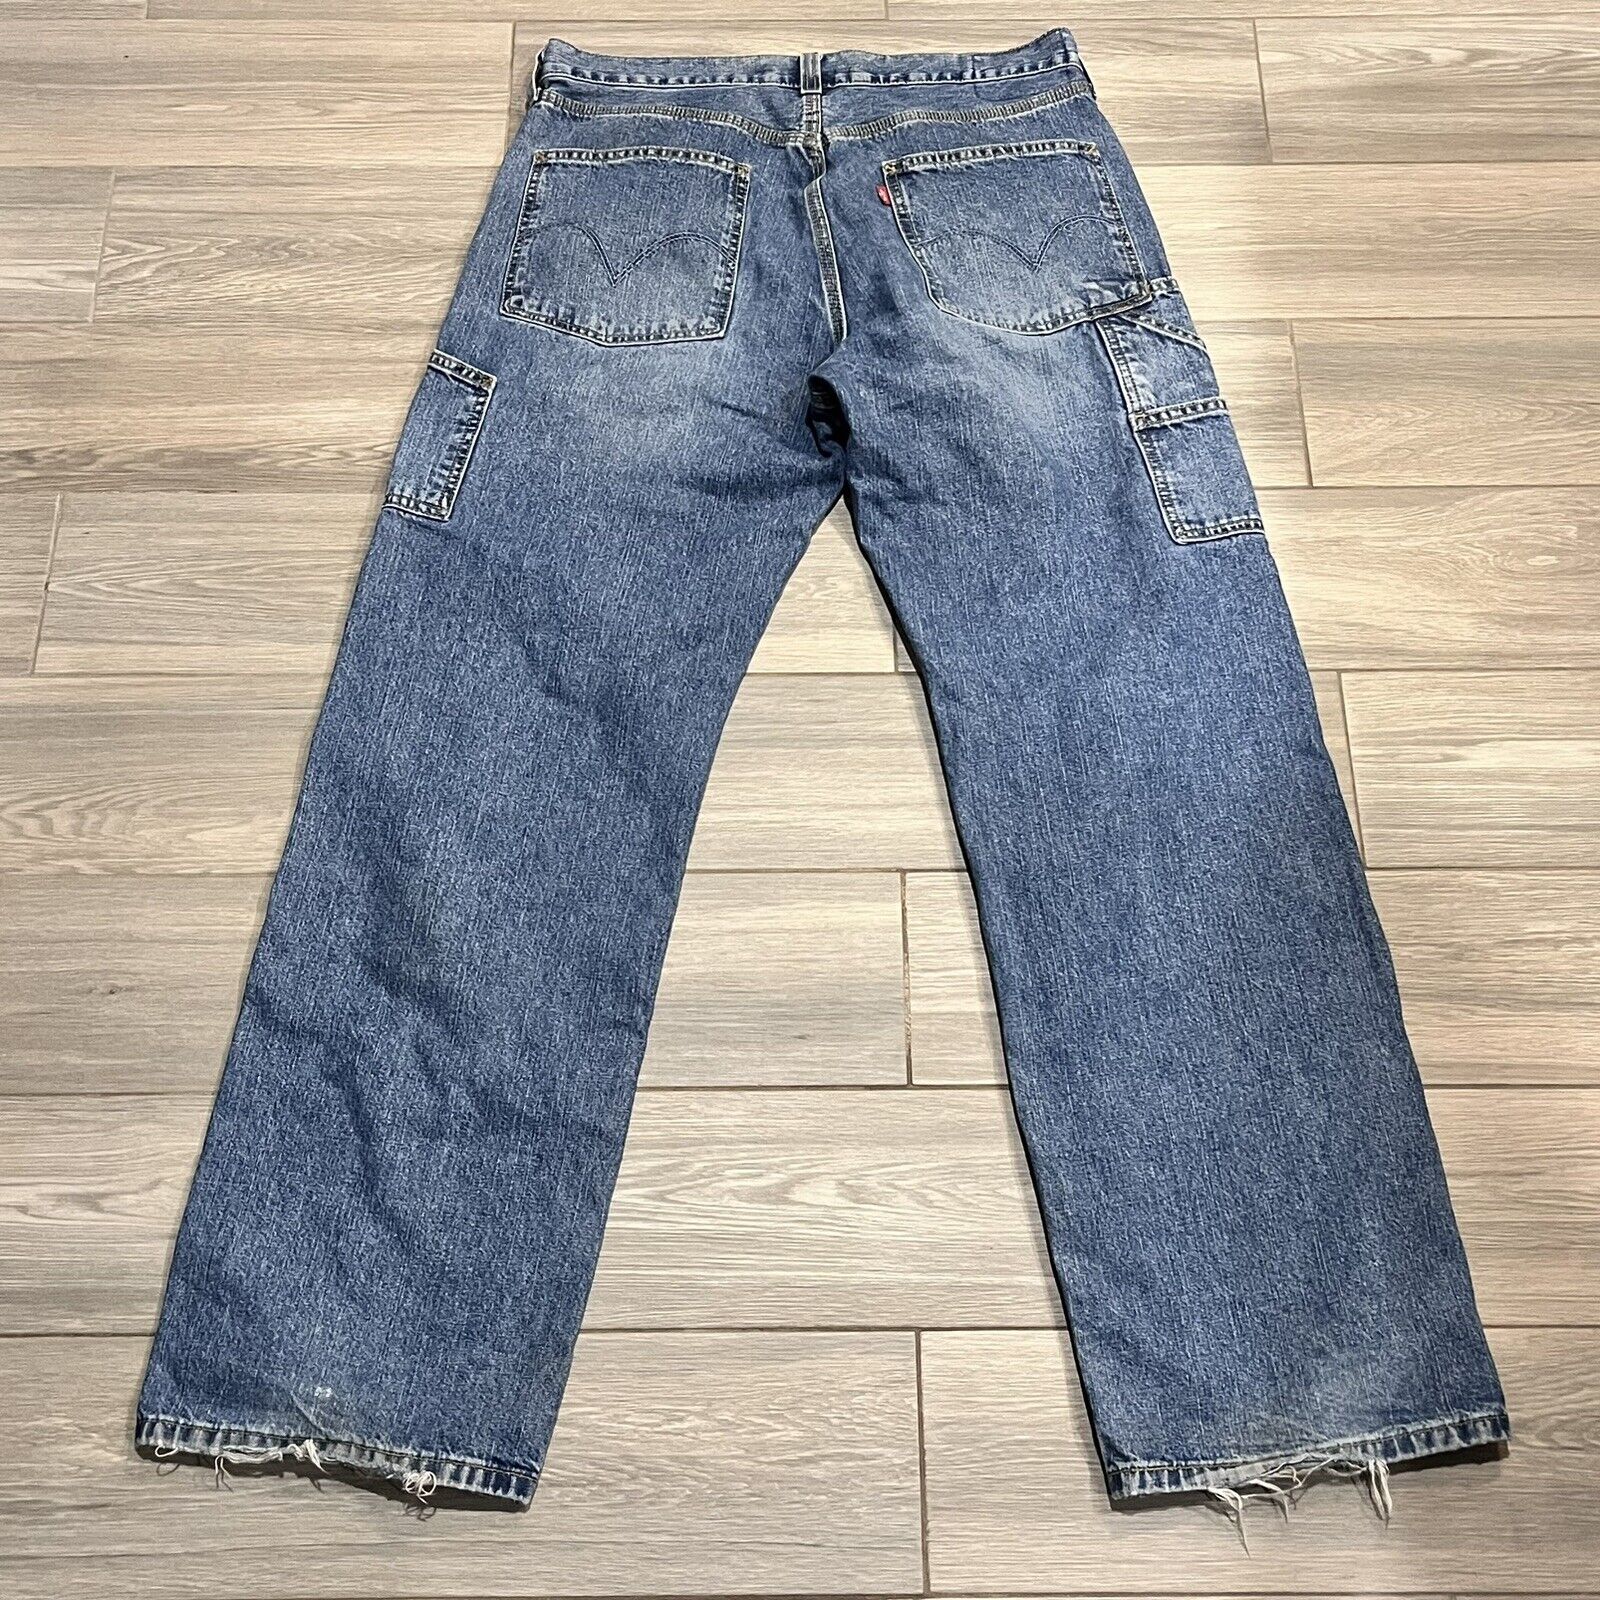 Levi’s Carpenter Pants Men’s 33x32 Levis Red Tab Jeans Streetwear Skater